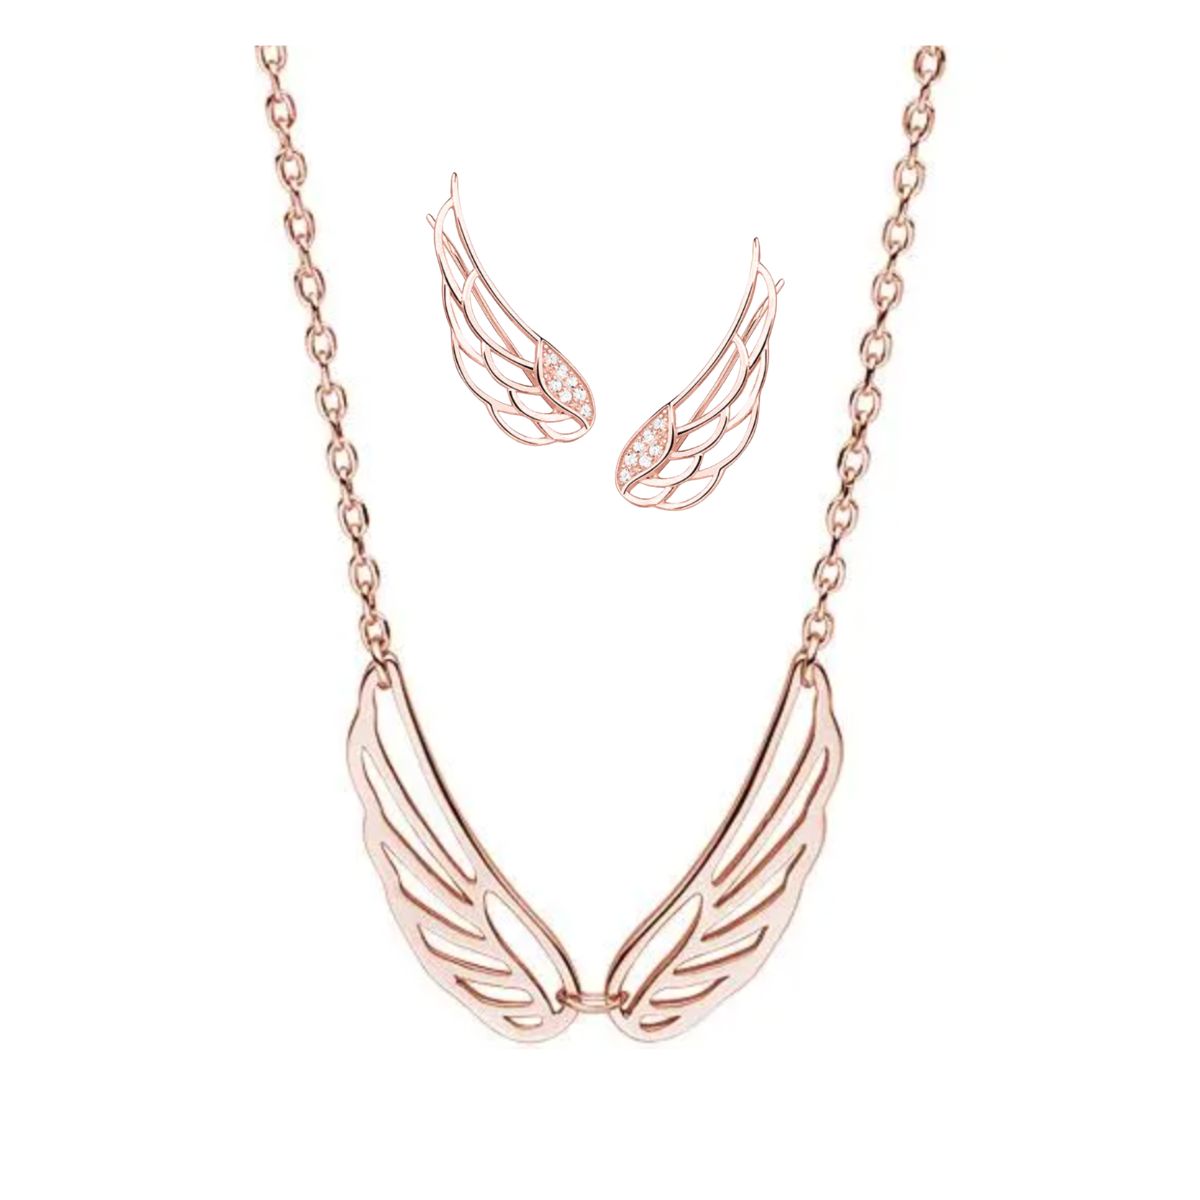 angel wing necklace and ear climber earrings Σετ Κολιέ και Σκουλαρίκια Angel Wing Ροζ Επιχρυσωμένο Ασήμι 925 - ασήμι 925